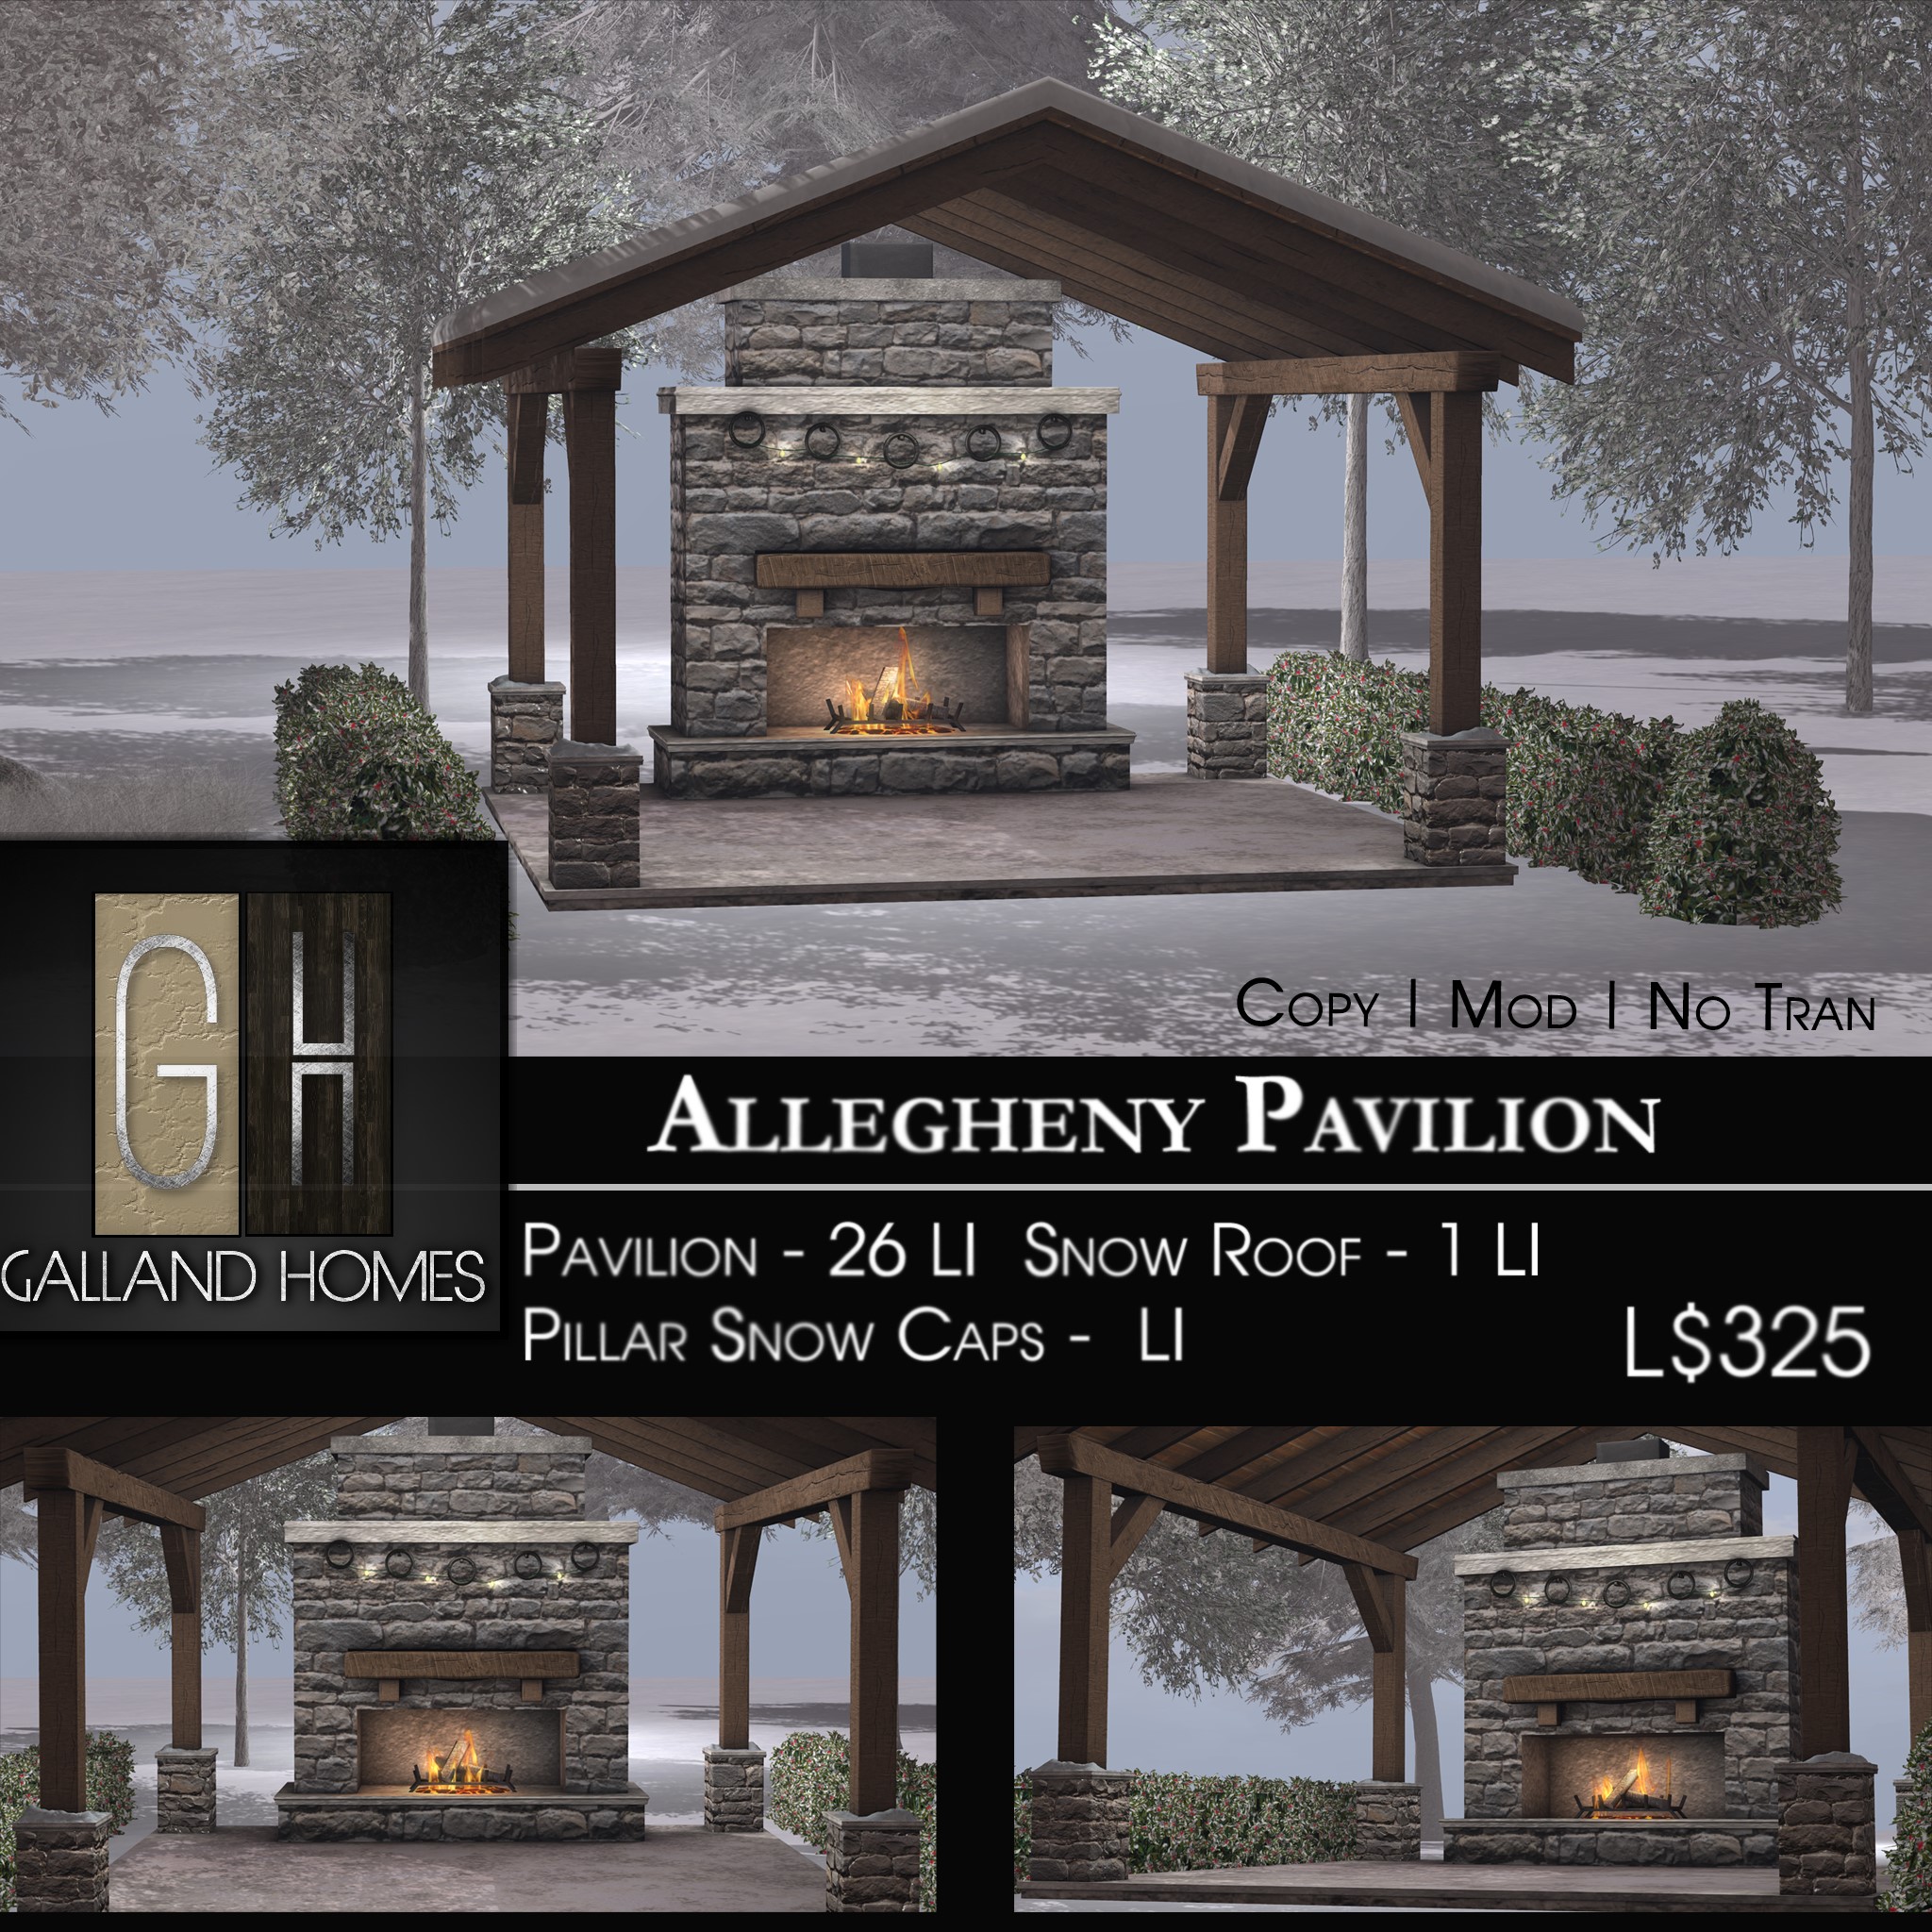 Galland Homes – Allegheny Pavilion